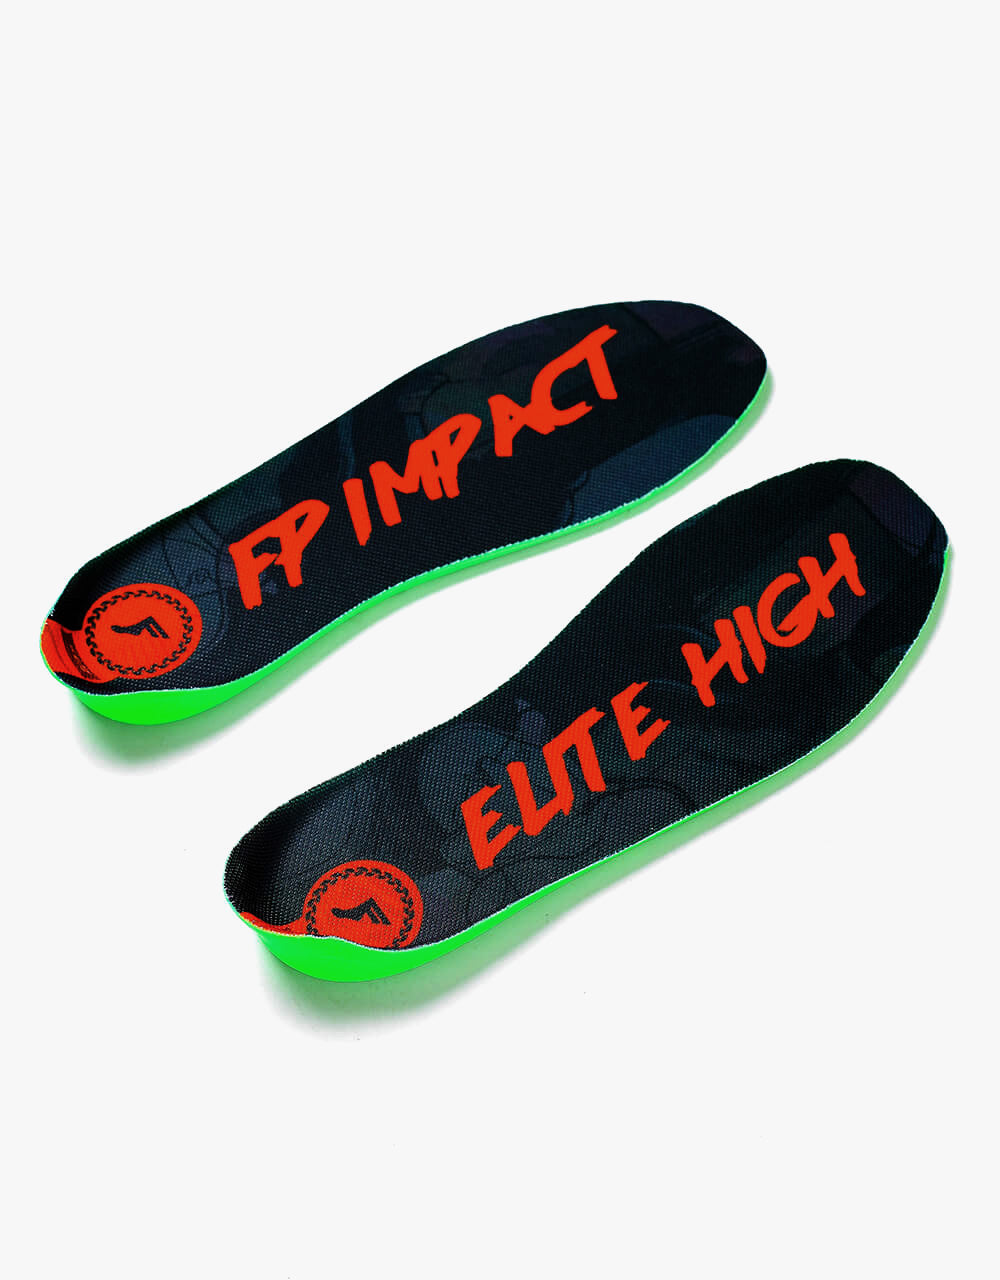 Footprint Classic Kingfoam Elite High Insoles